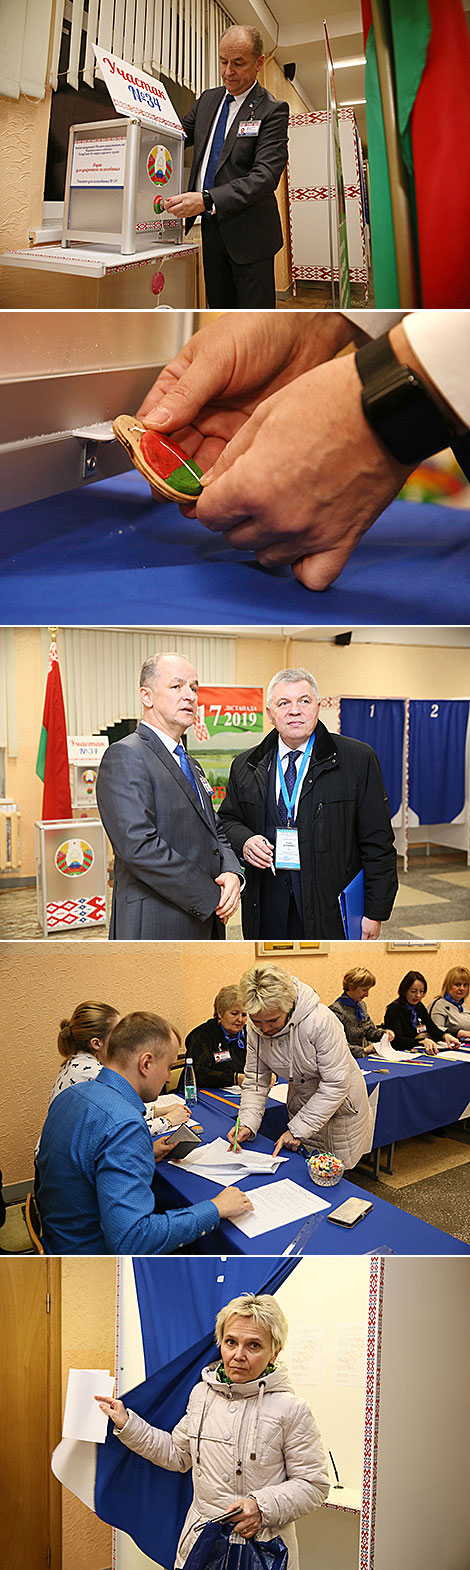 Elections 2019: Voting starts in Belarus